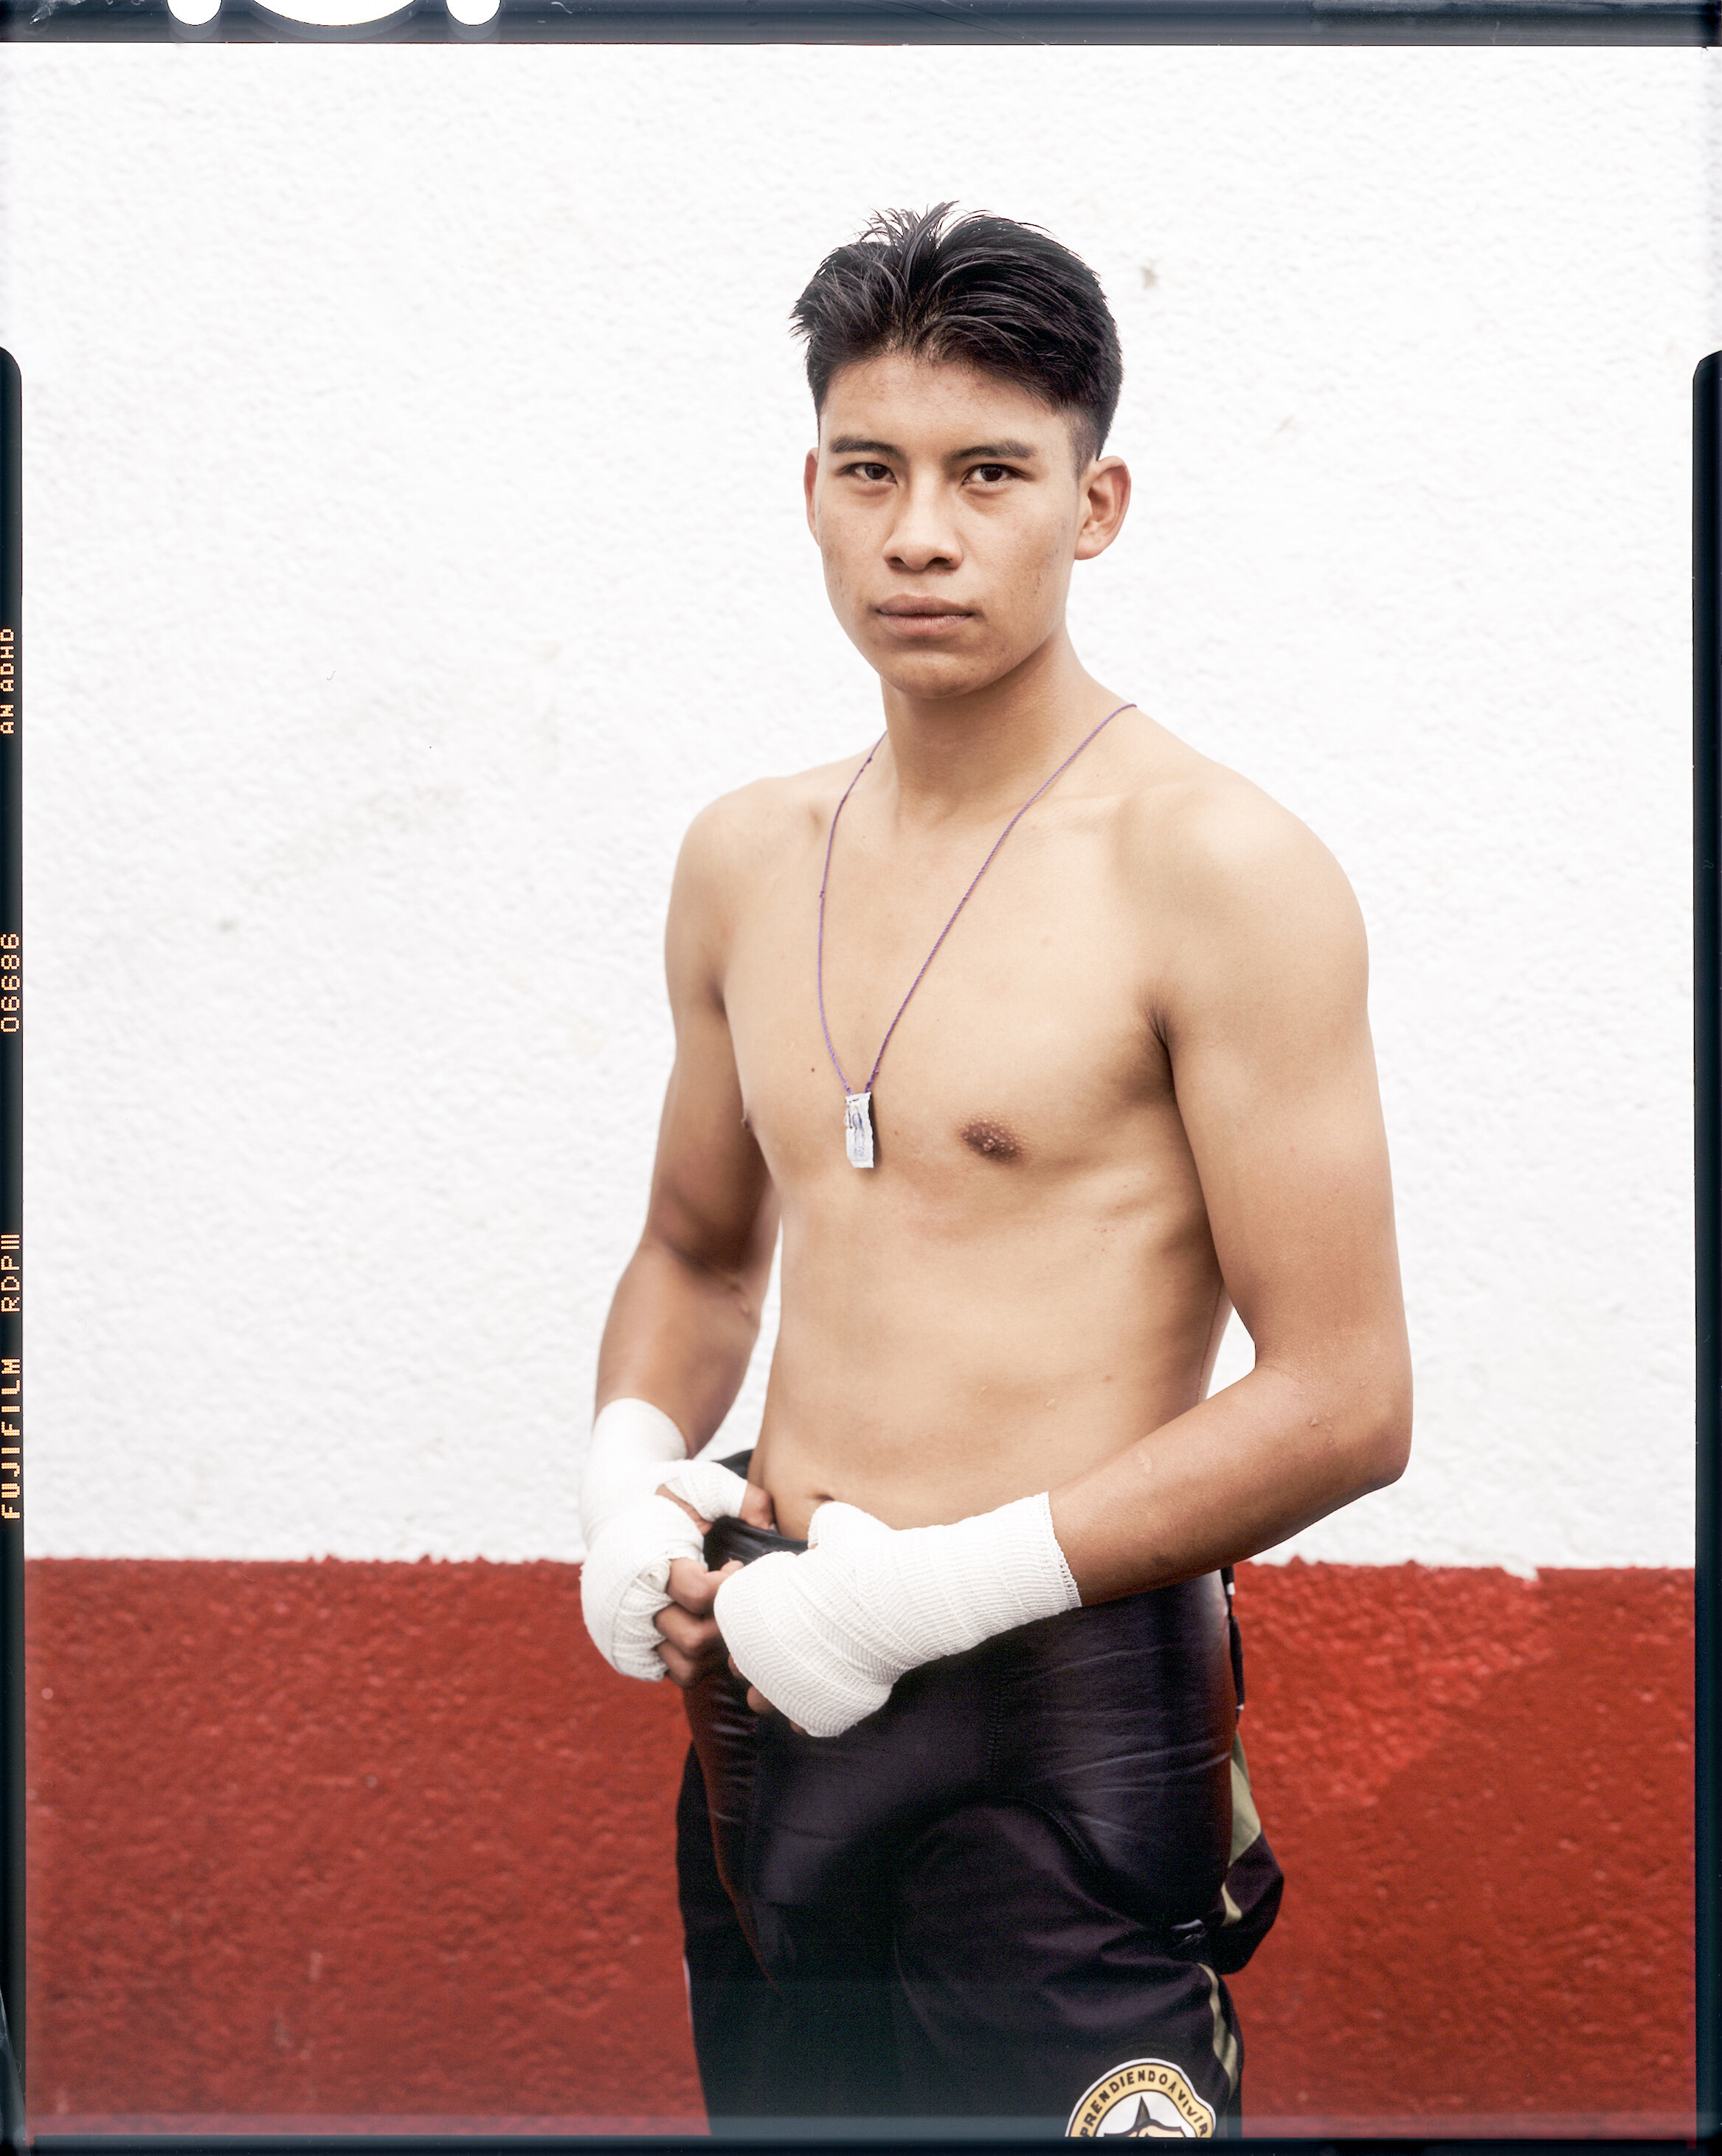 mexico boxingsaveslives-22.jpg